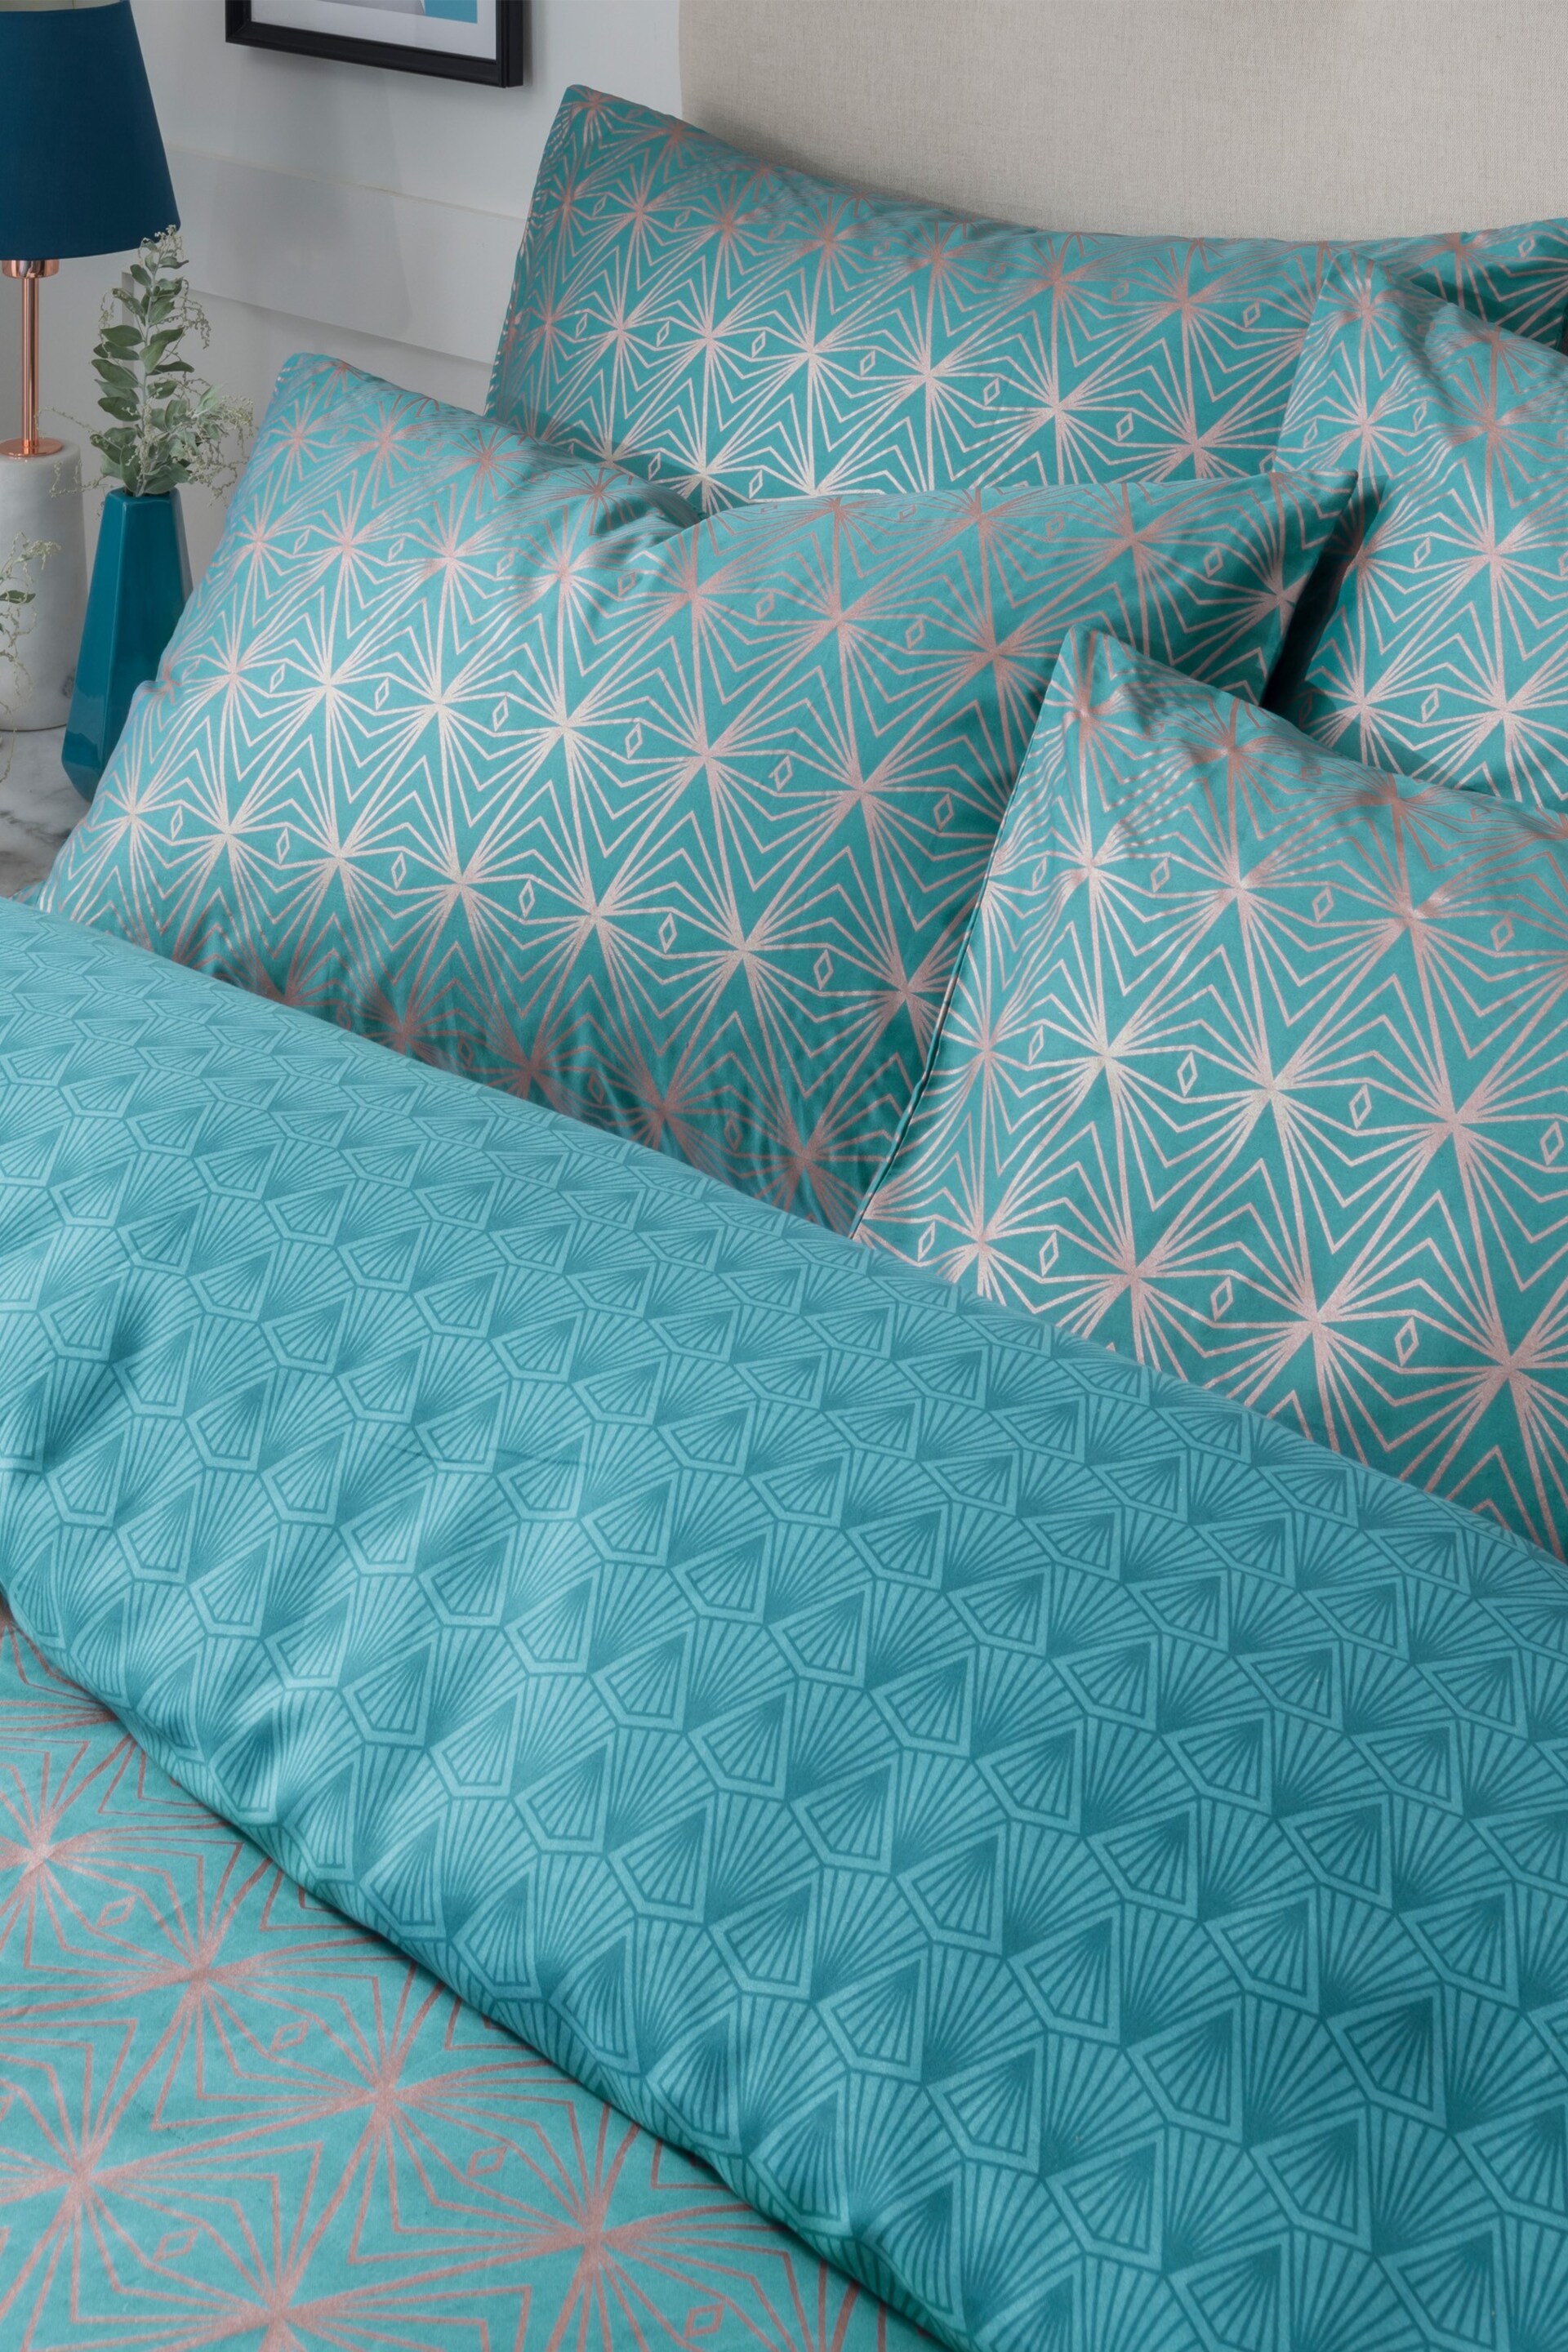 Sam Faiers Teal Blue Caspia Deco Duvet Cover and Pillowcase Set - Image 2 of 3